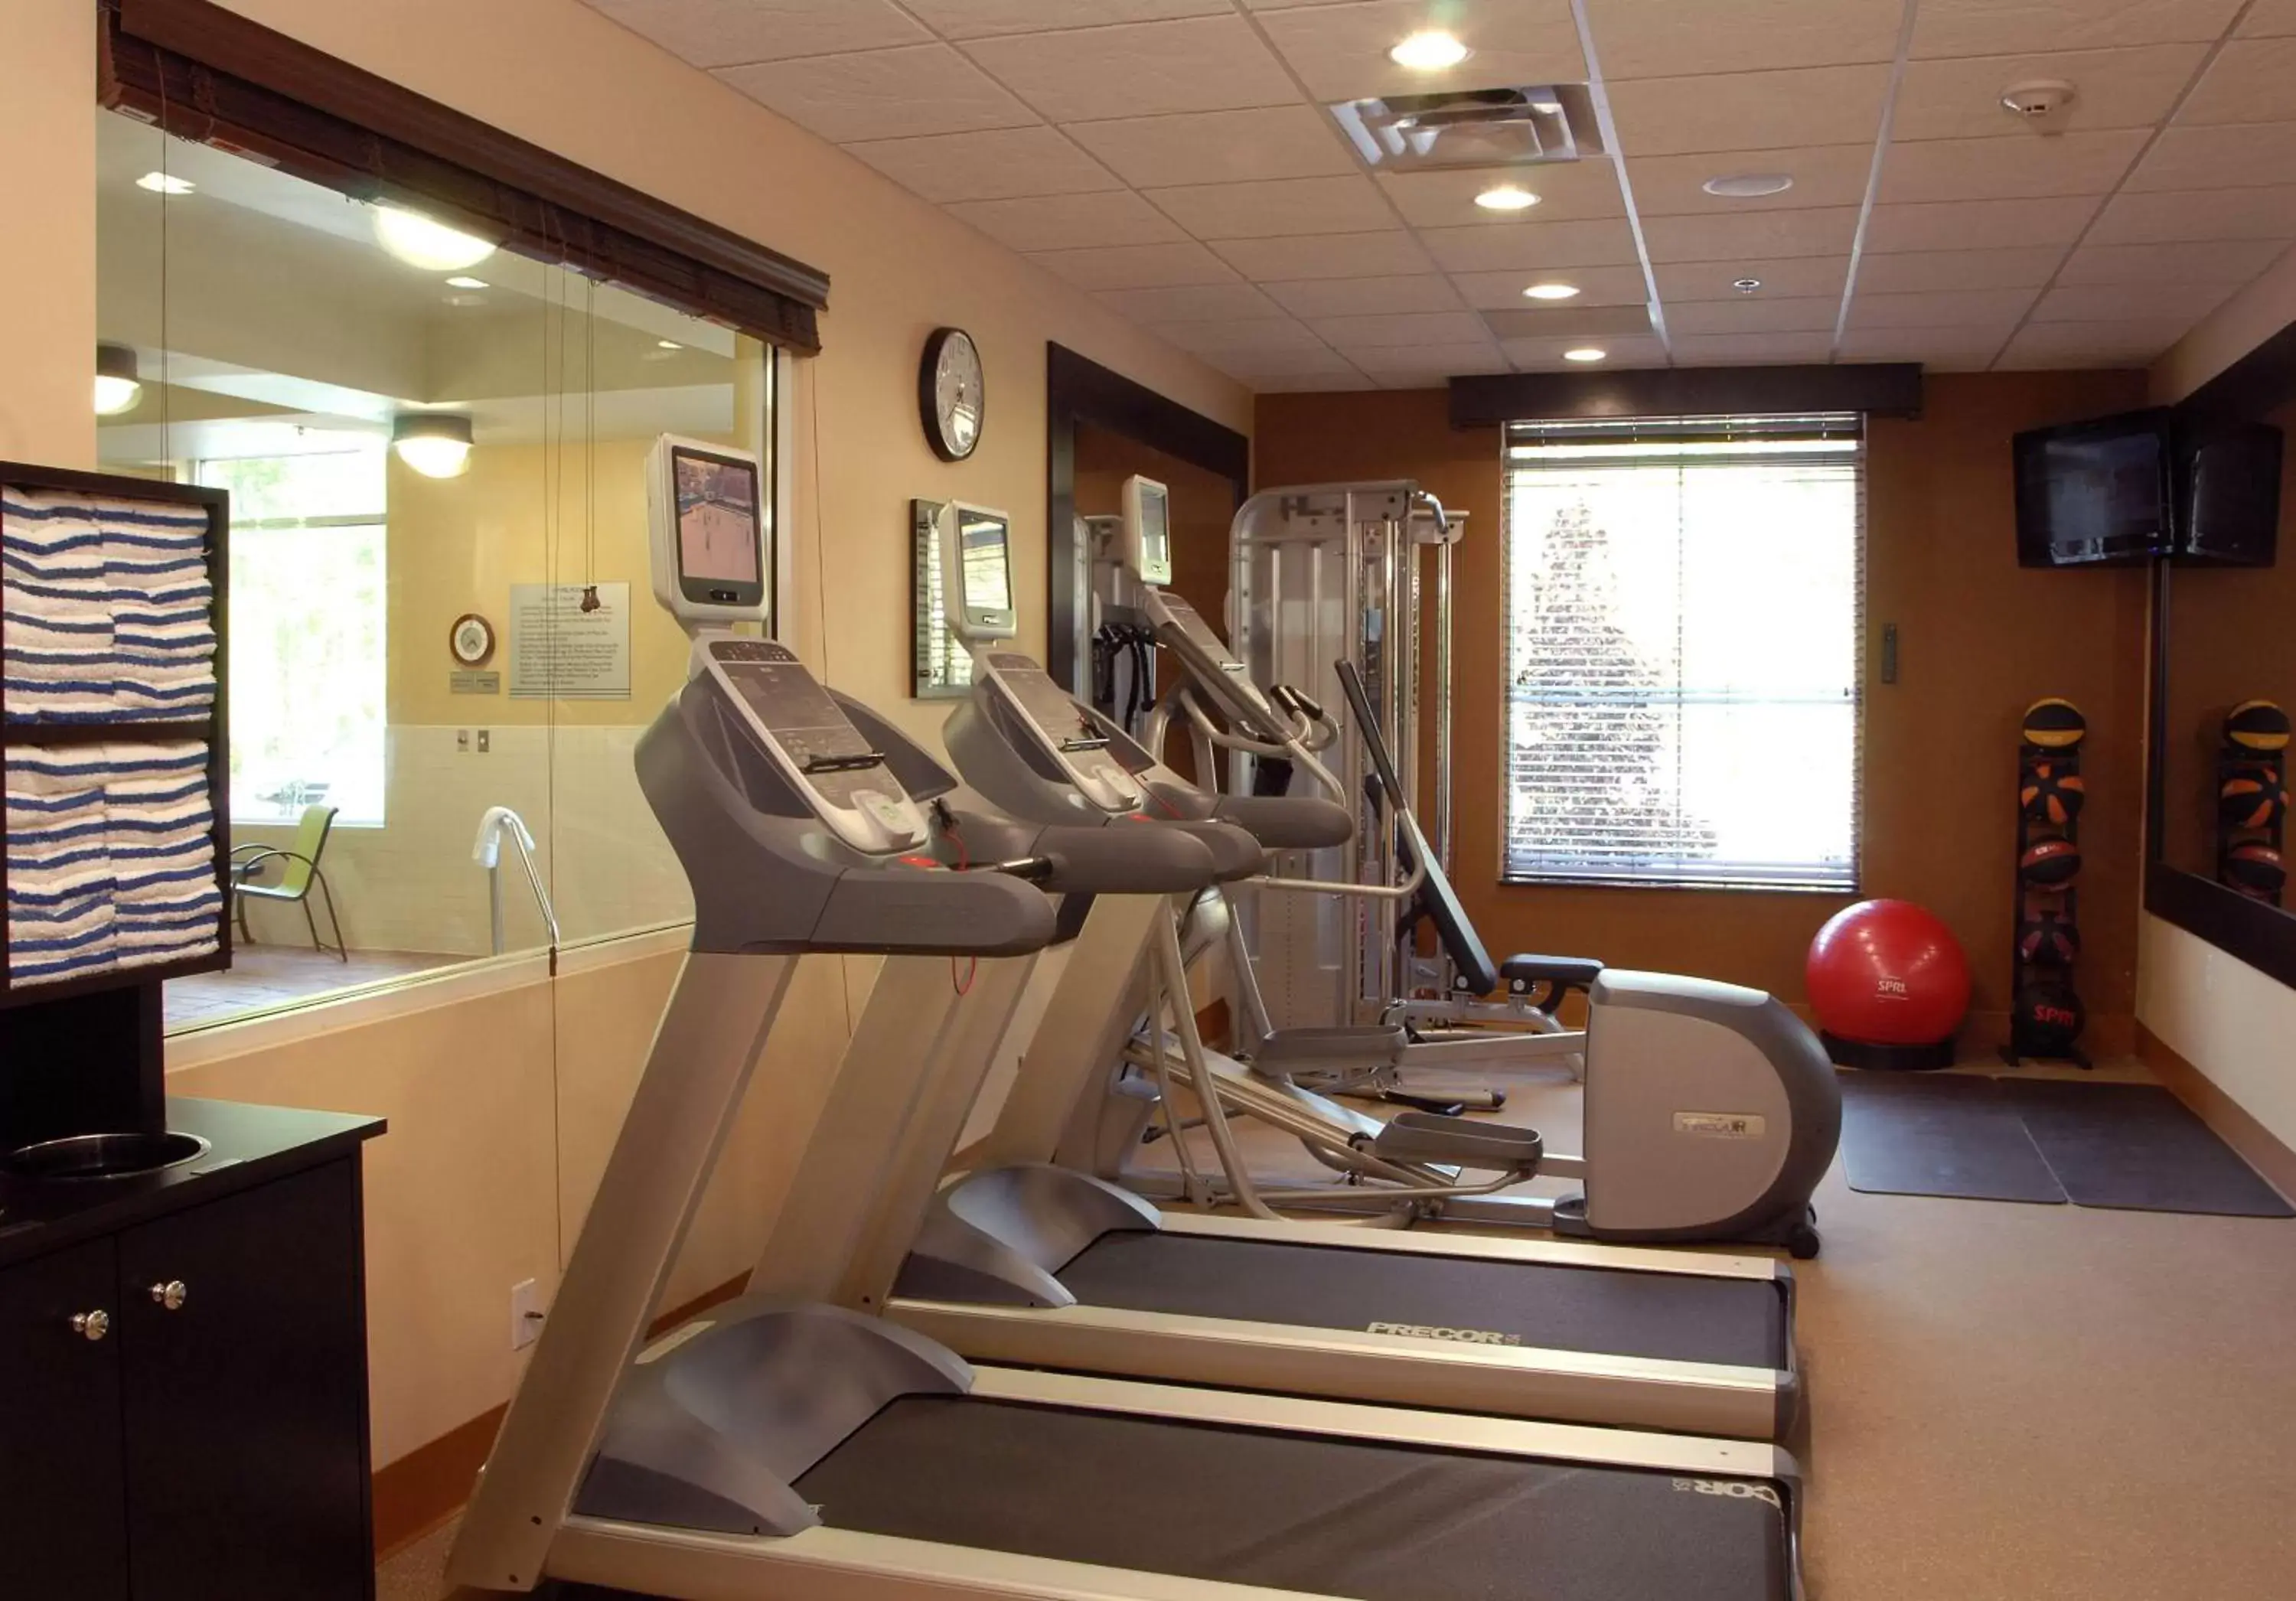 Fitness centre/facilities, Fitness Center/Facilities in Hilton Garden Inn Atlanta/Peachtree City